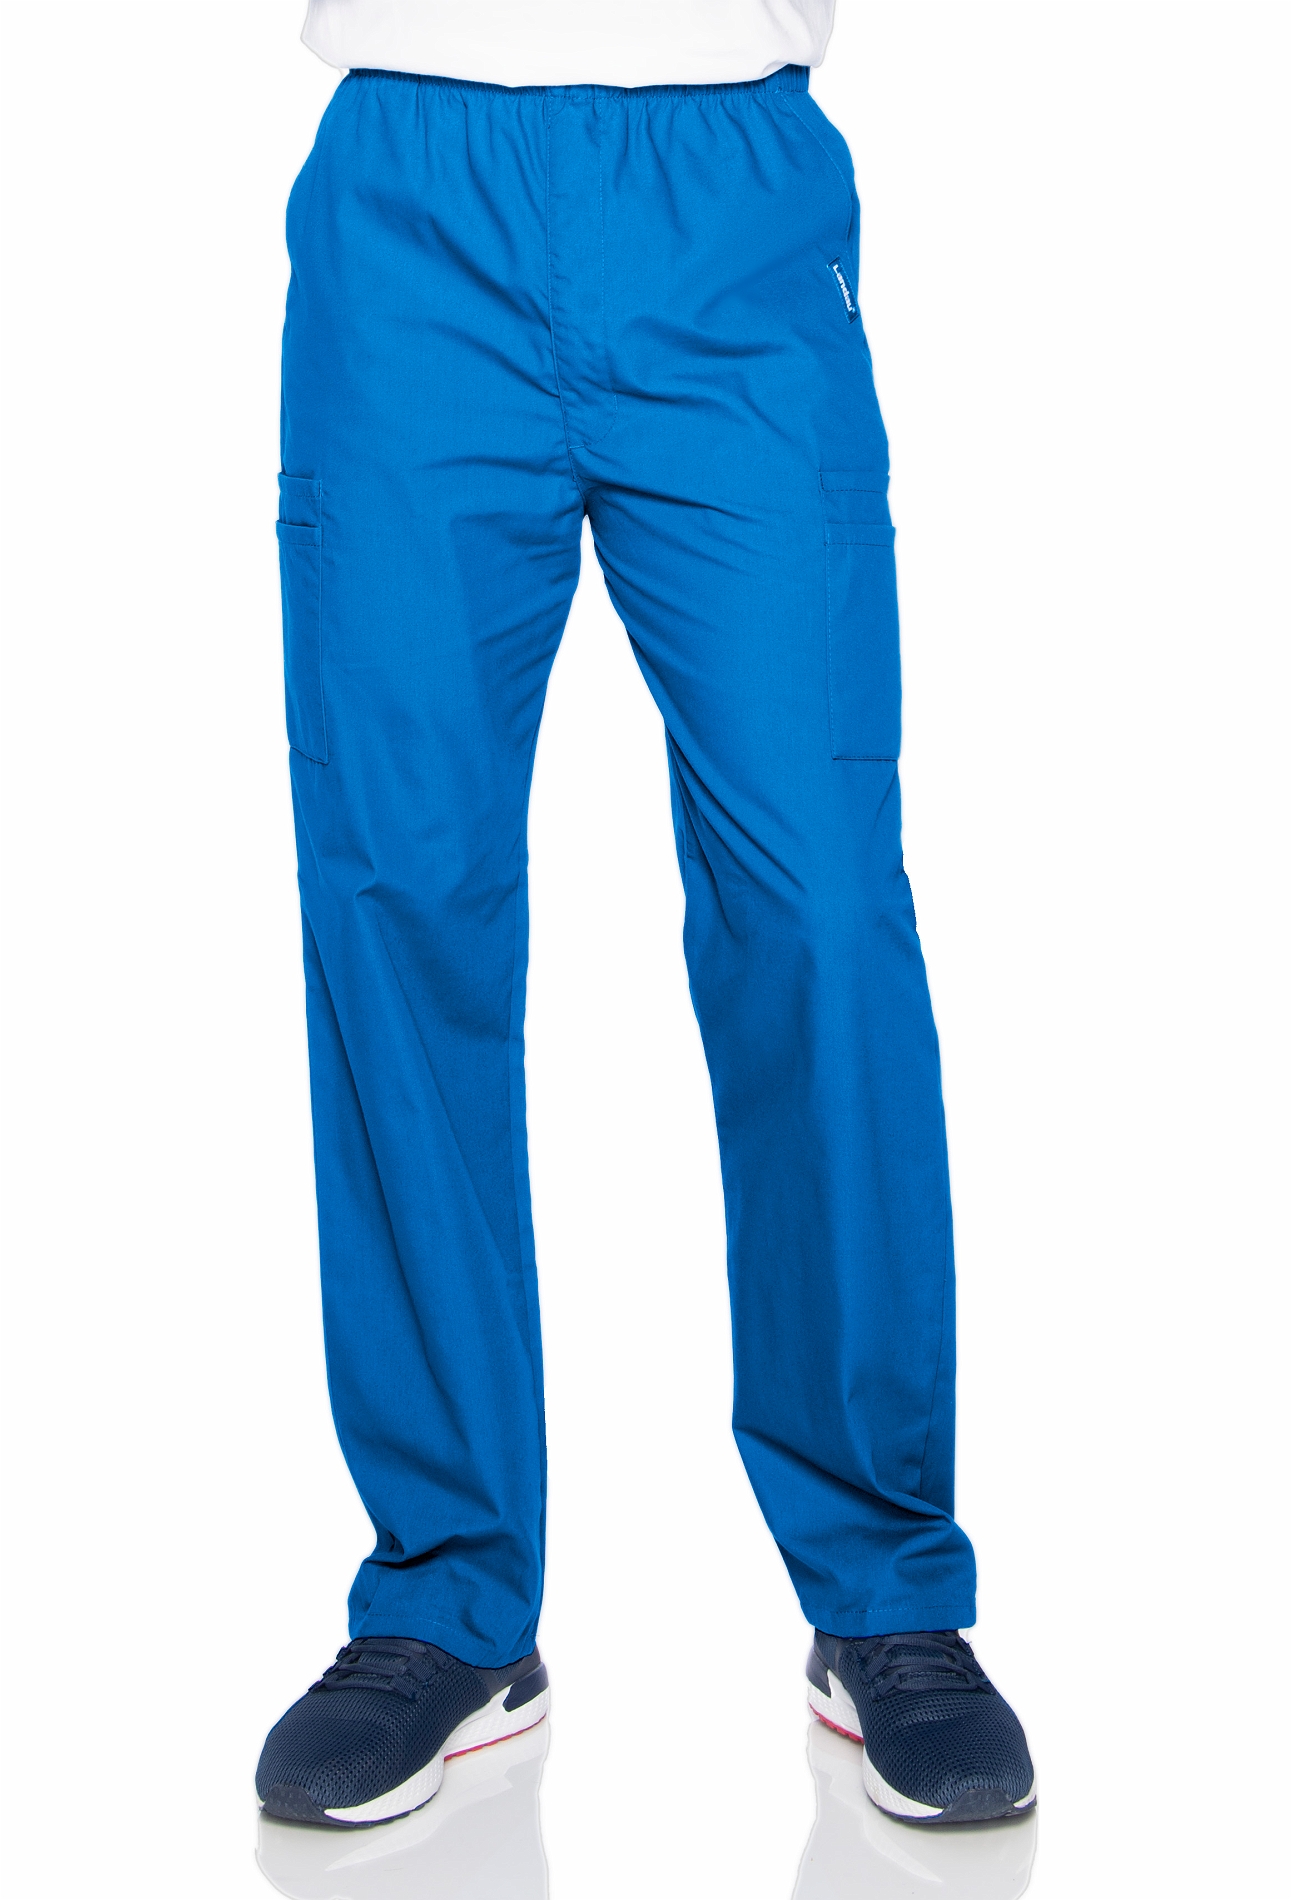 Landau Men's Elastic Waist Cargo Scrub Pants-8555 (Royal Blue - X-Large)